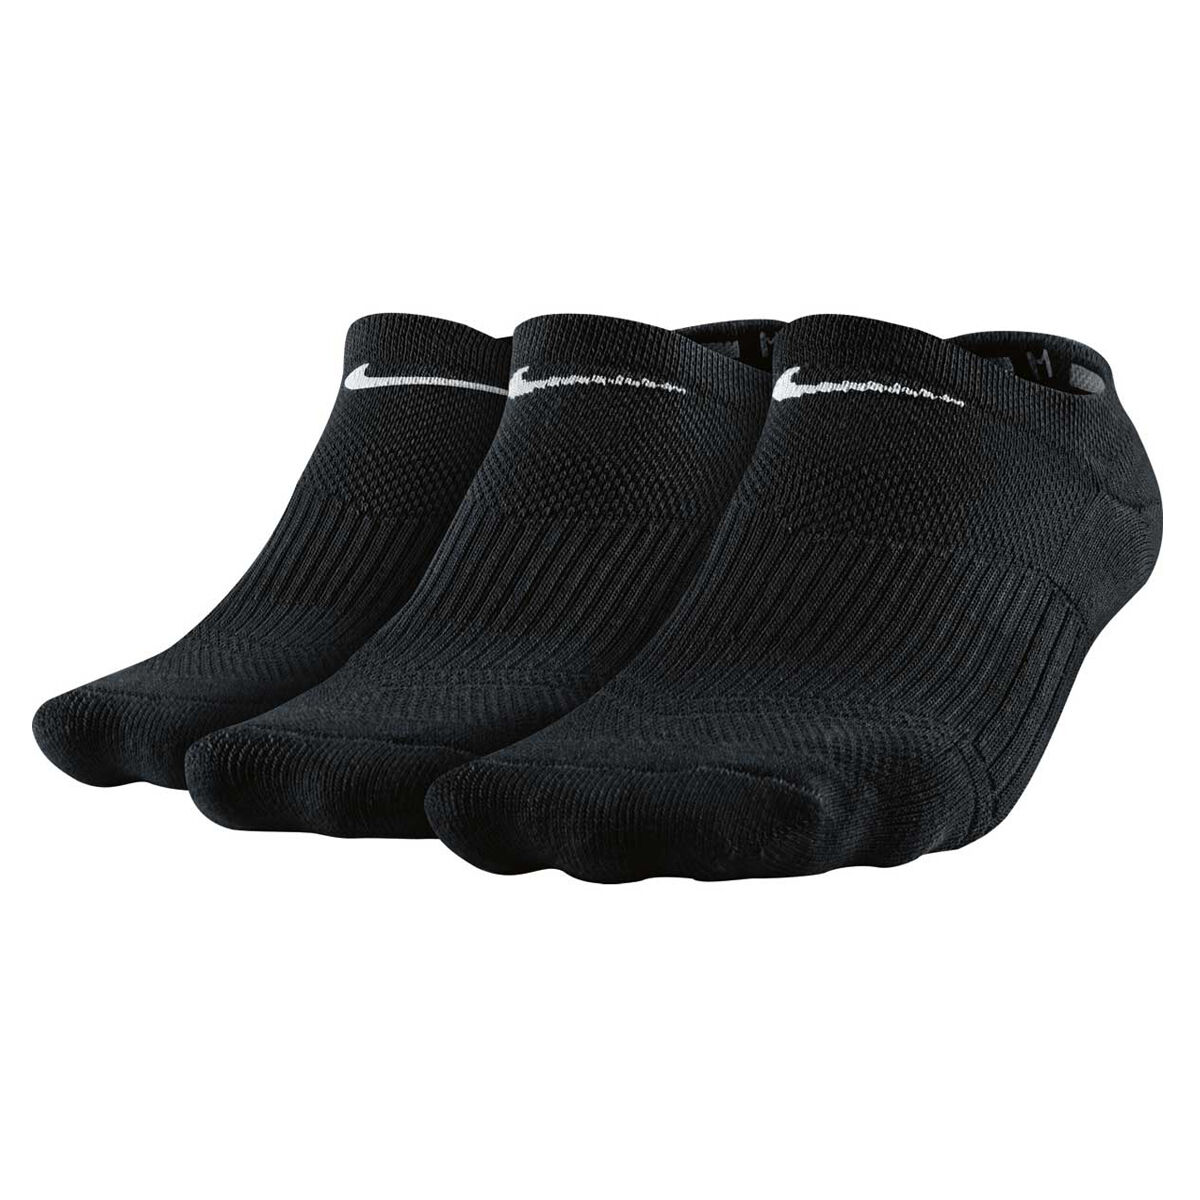 women's nike socks black